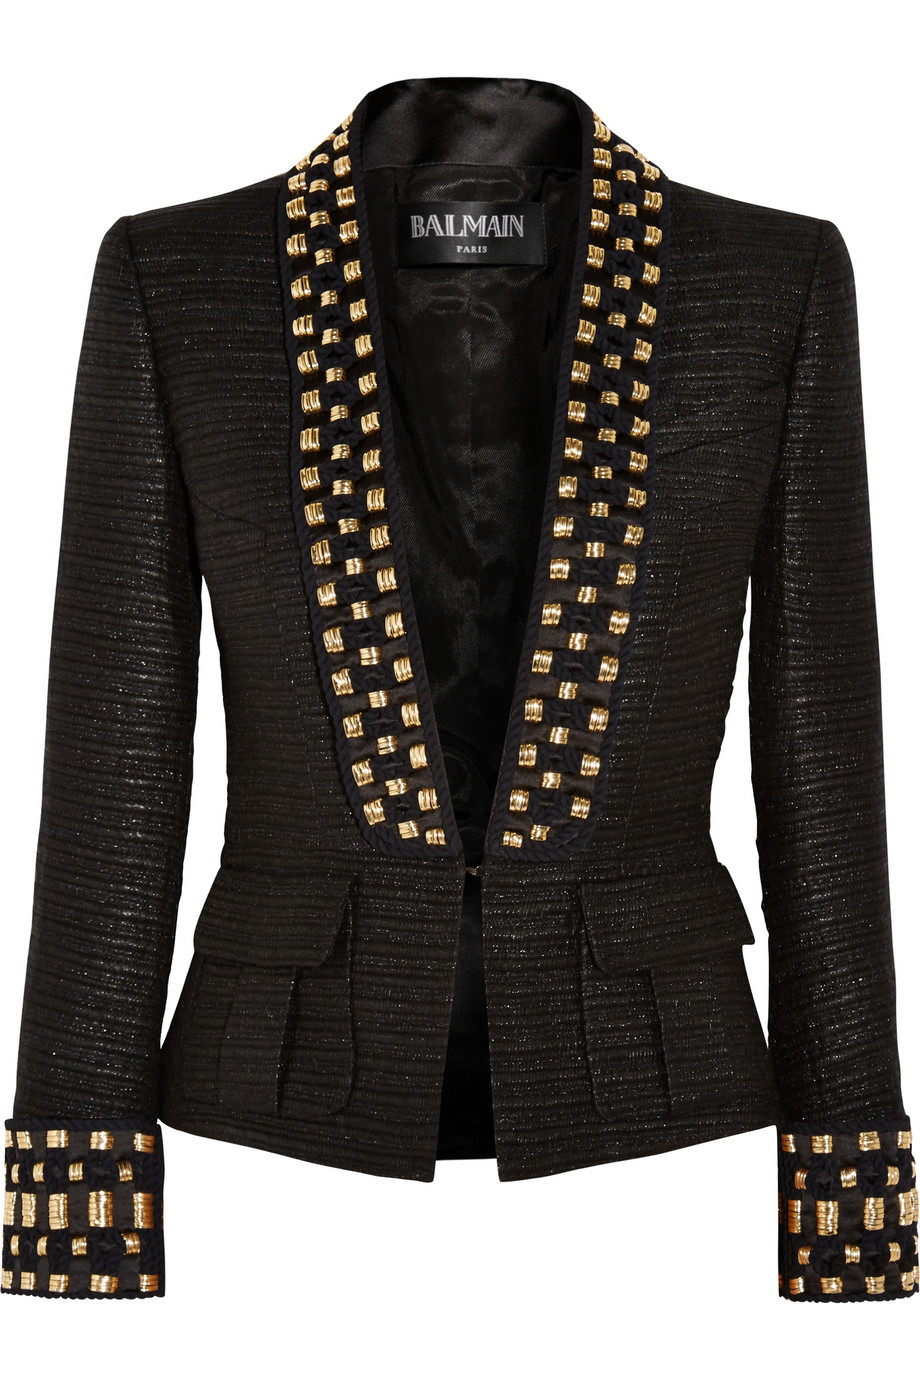 Balmain Embellished Tweed Blazer in Black | Lyst